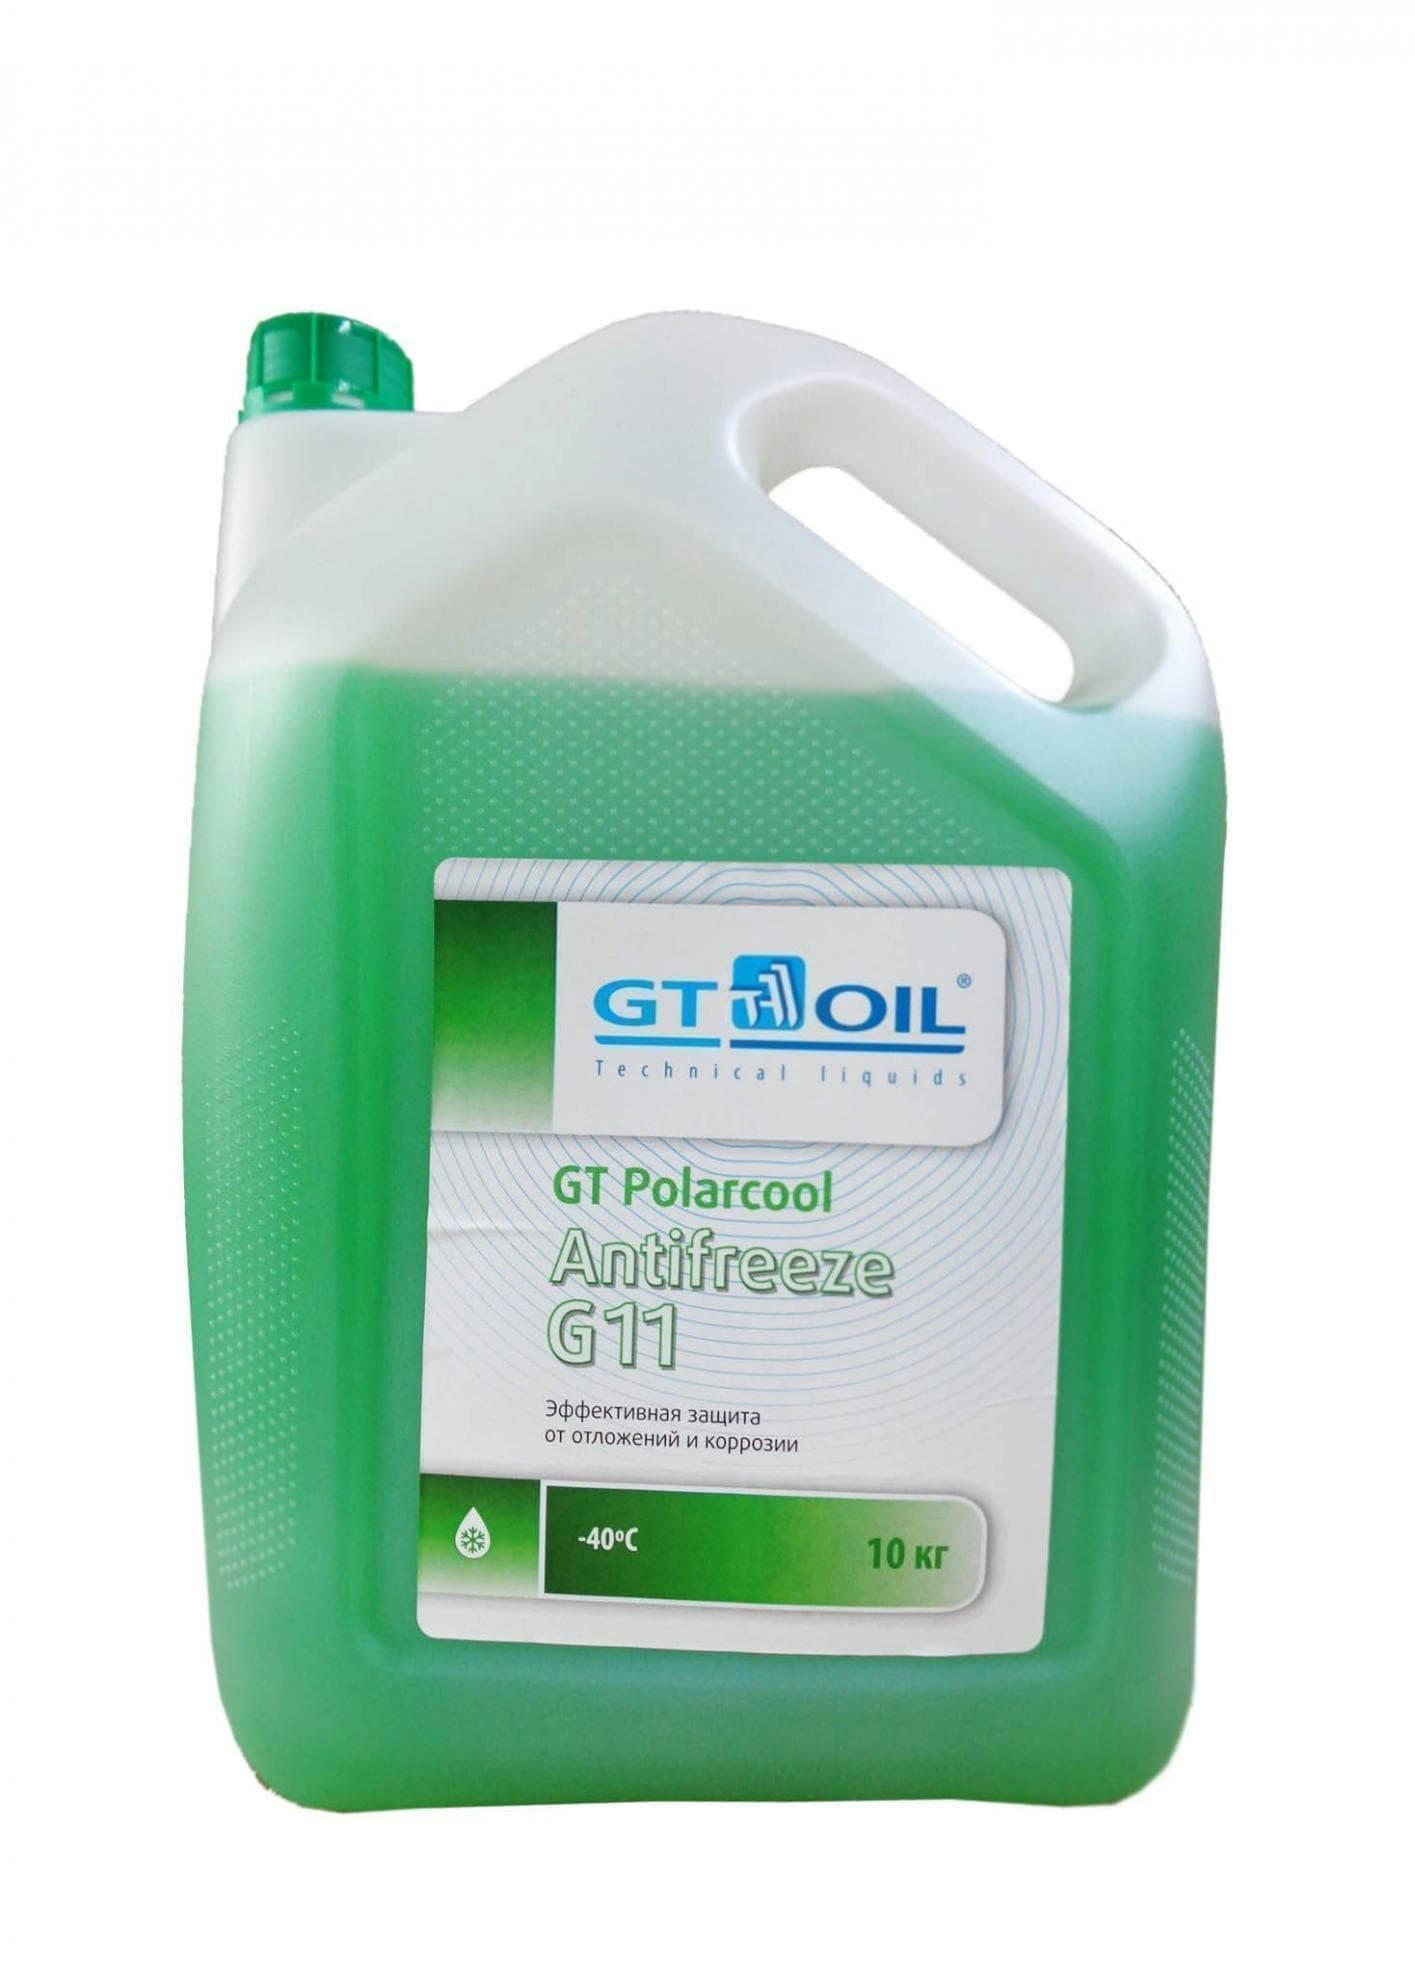 Антифриз G11 GT Polarcool готовый 10л (зеленый) артикул 1950032214021